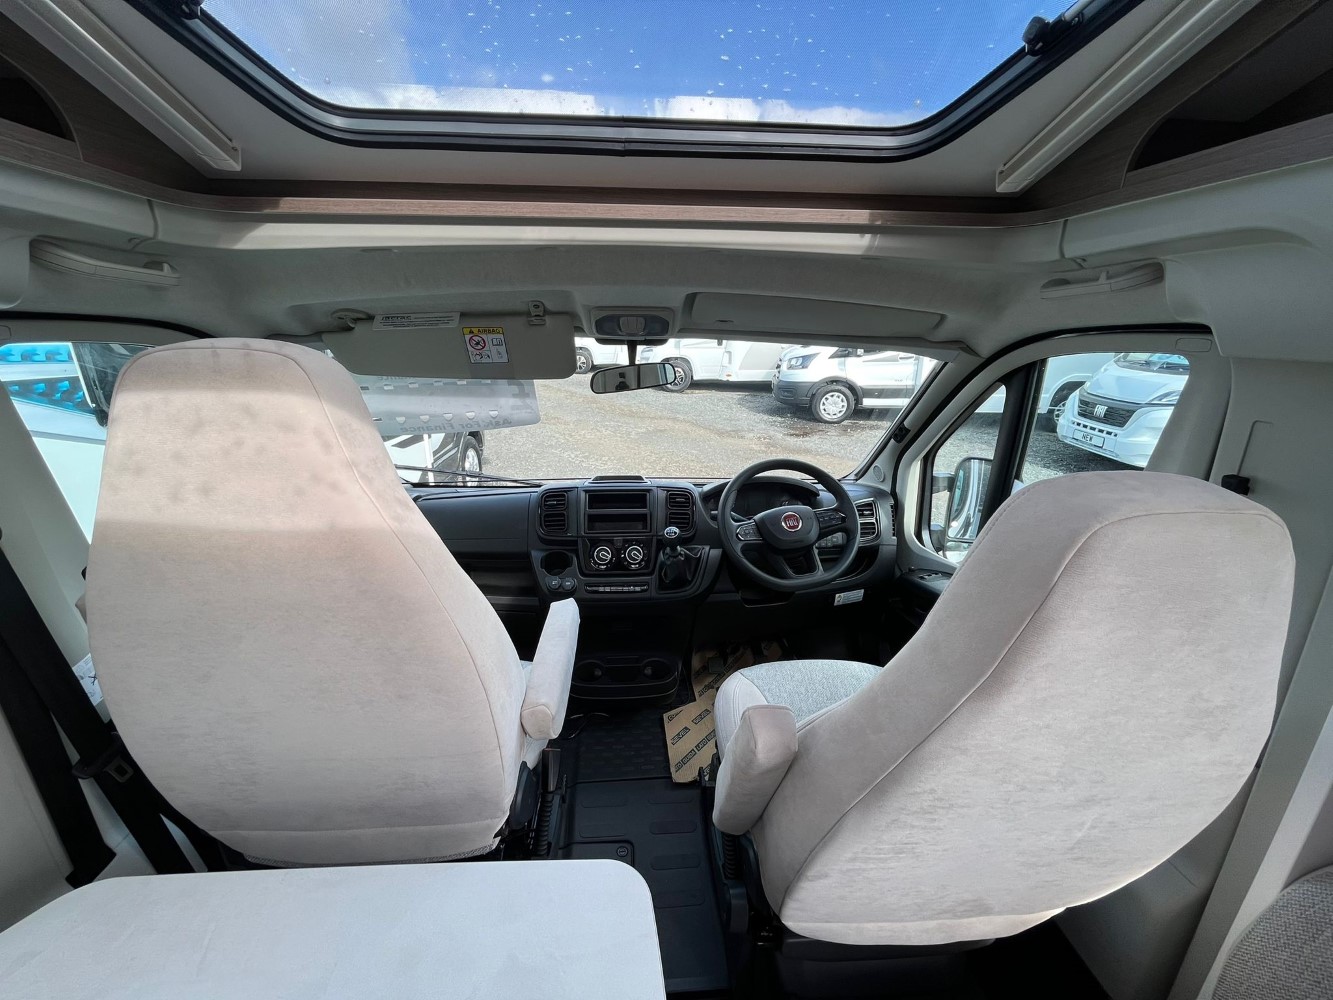 New Carado V132 Pro Van